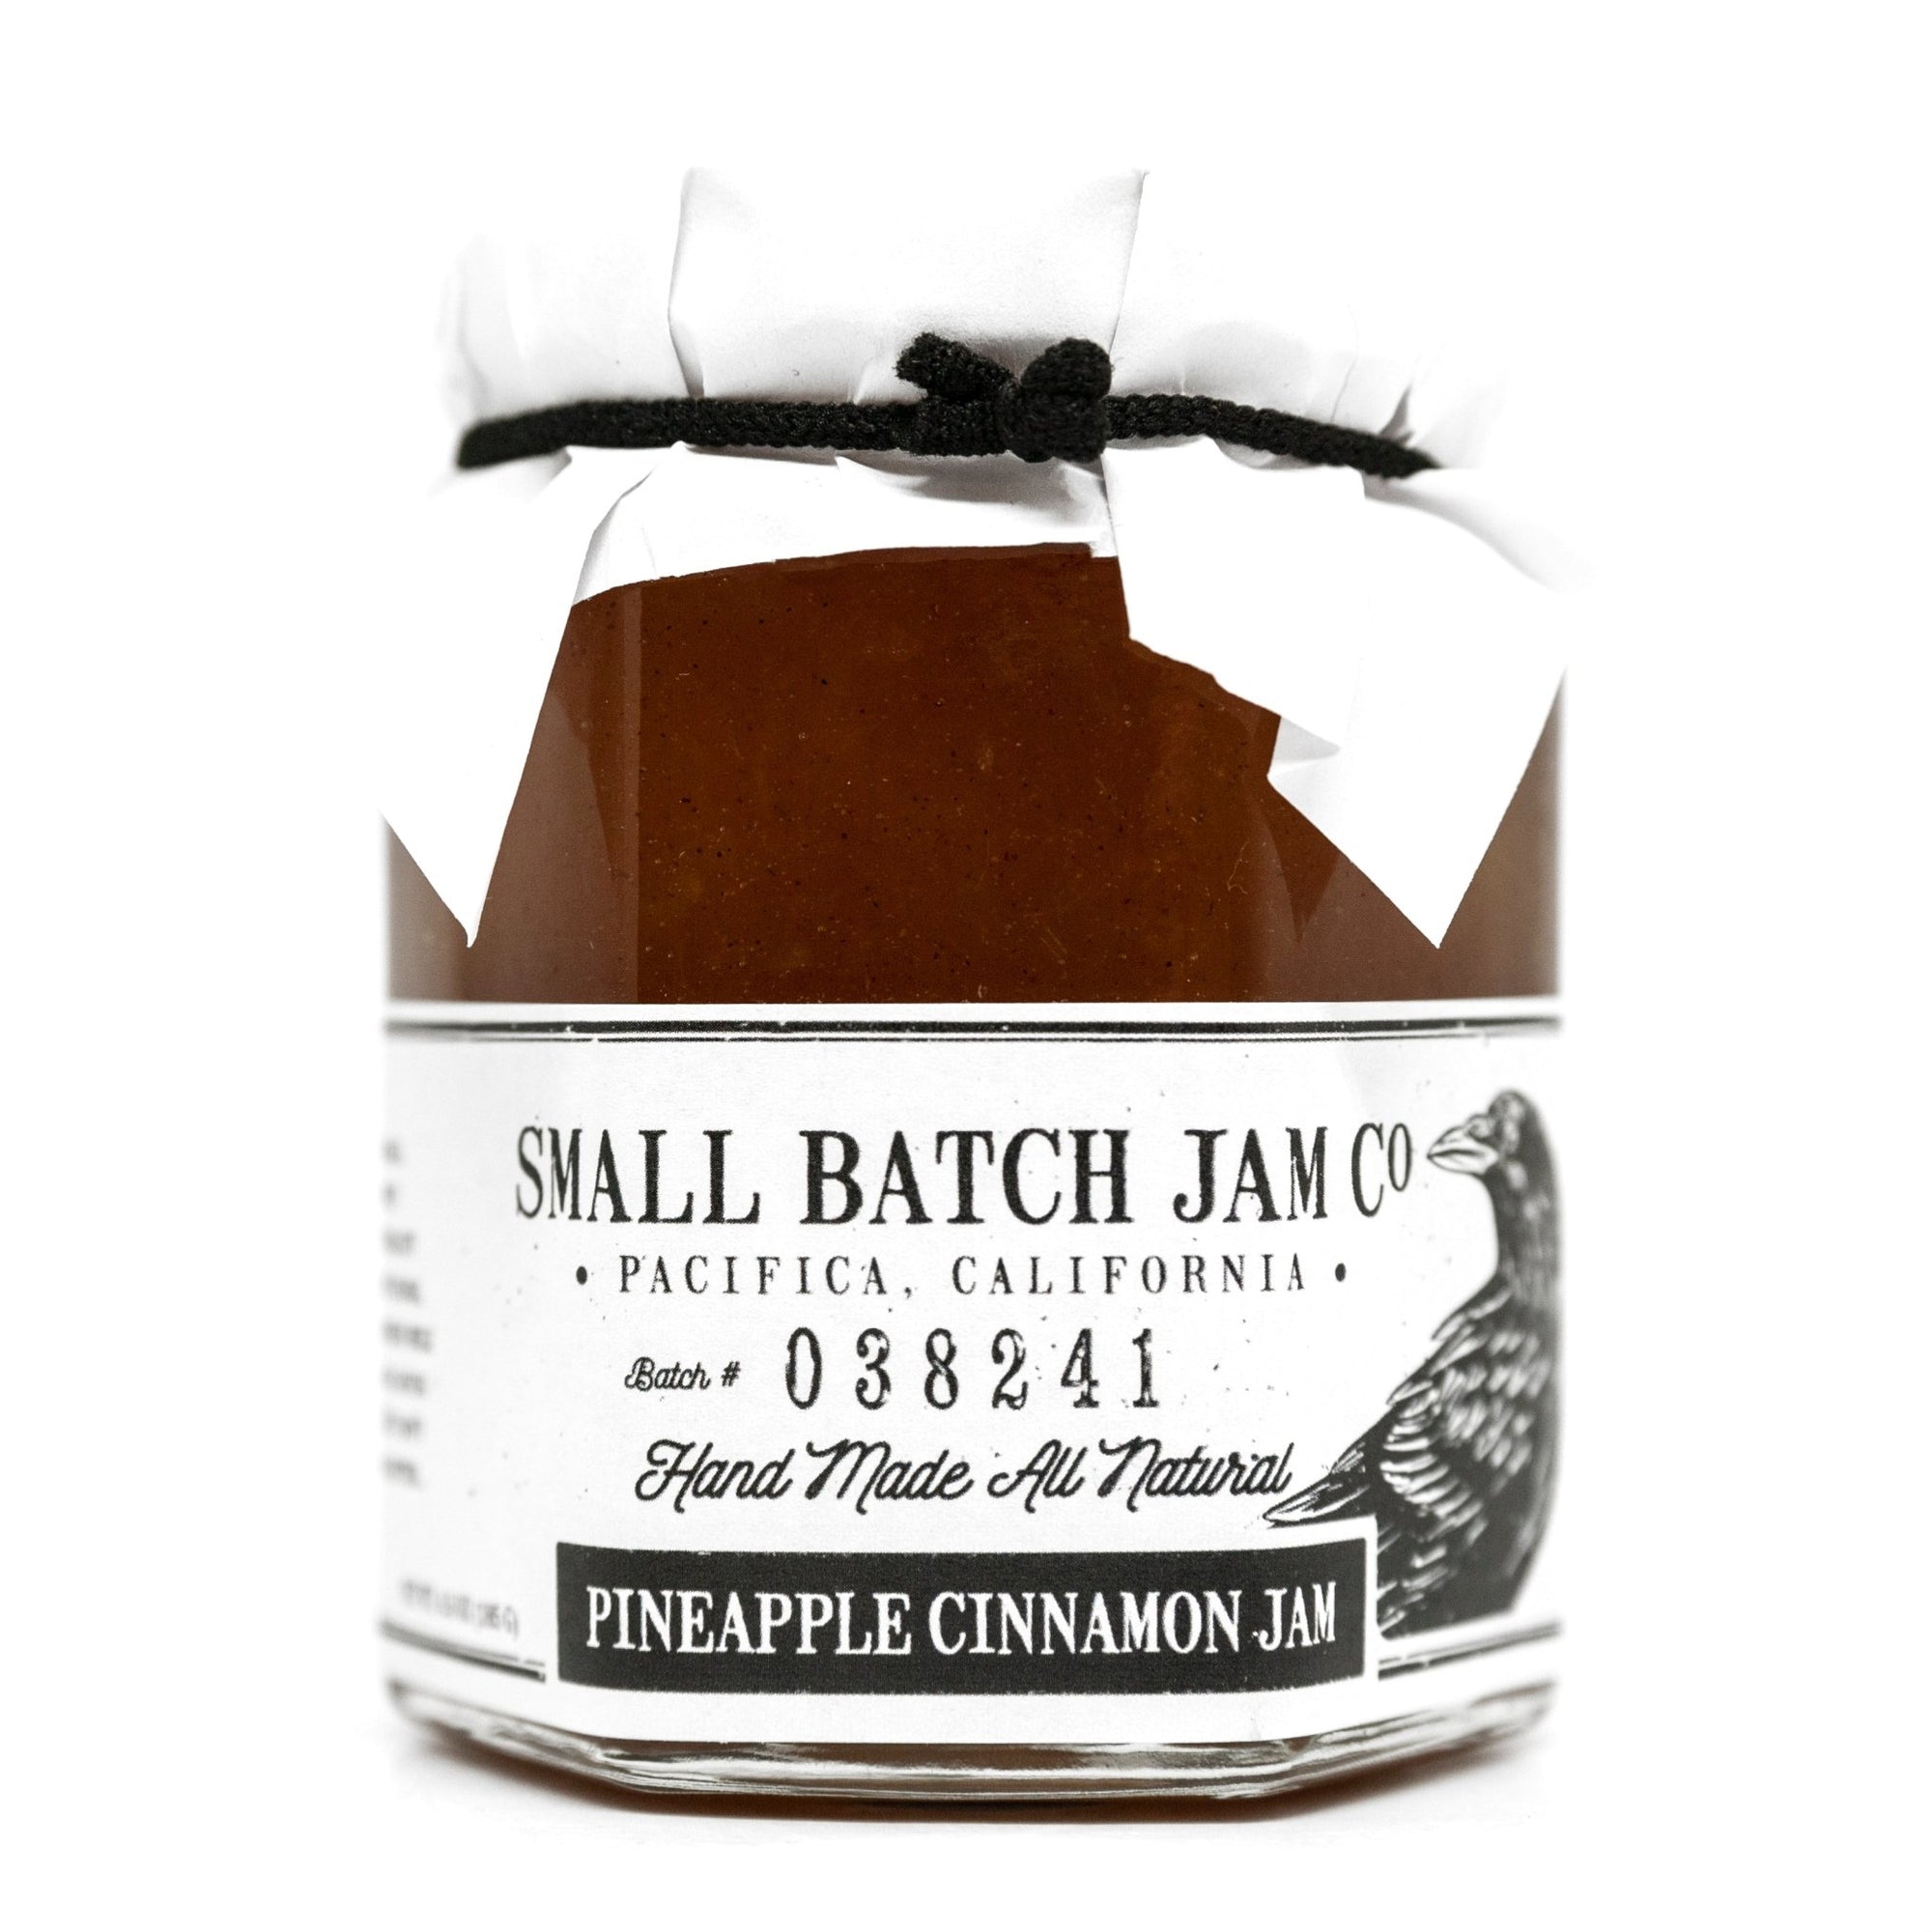 Pineapple Cinnamon Jam - Small Batch Jam Co